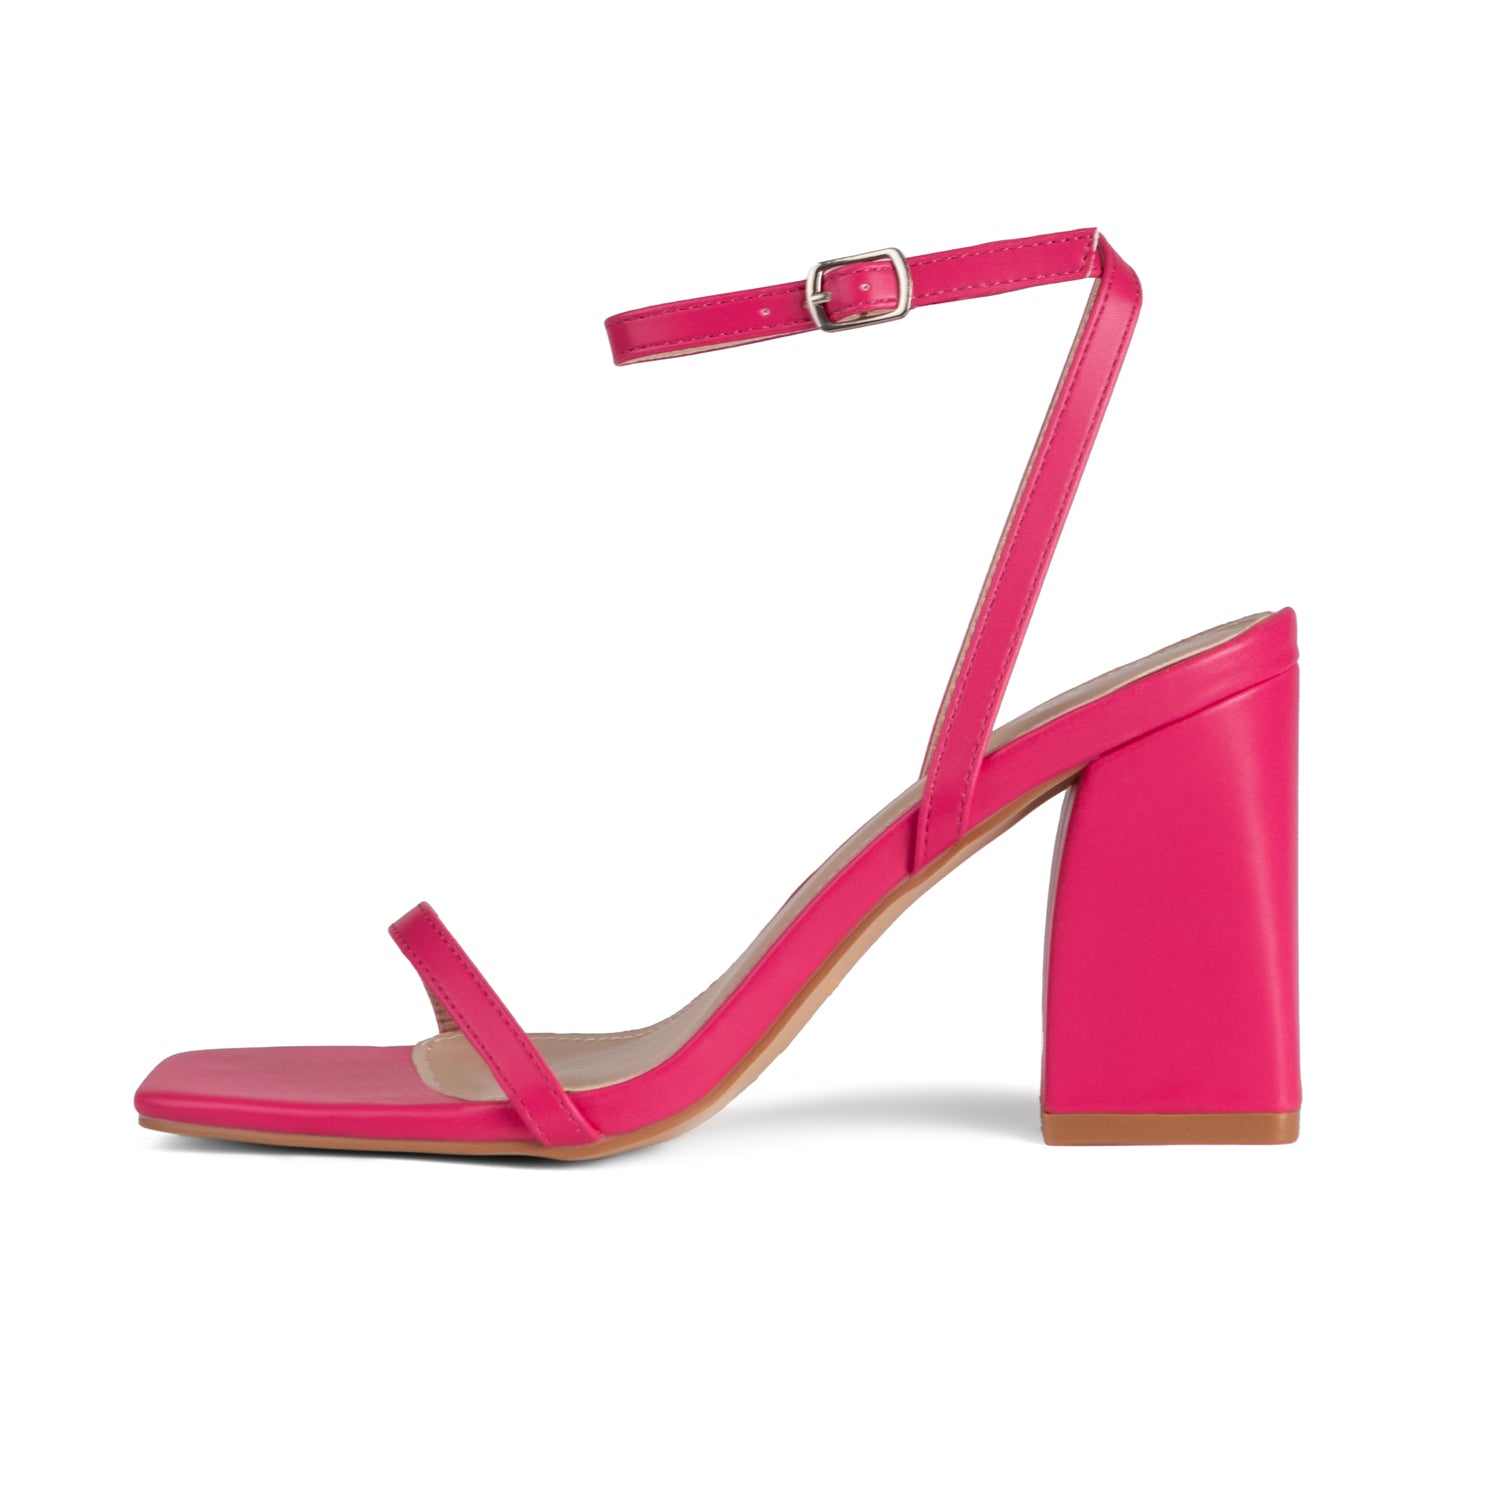 RAID Blaire Block Heels in Pink